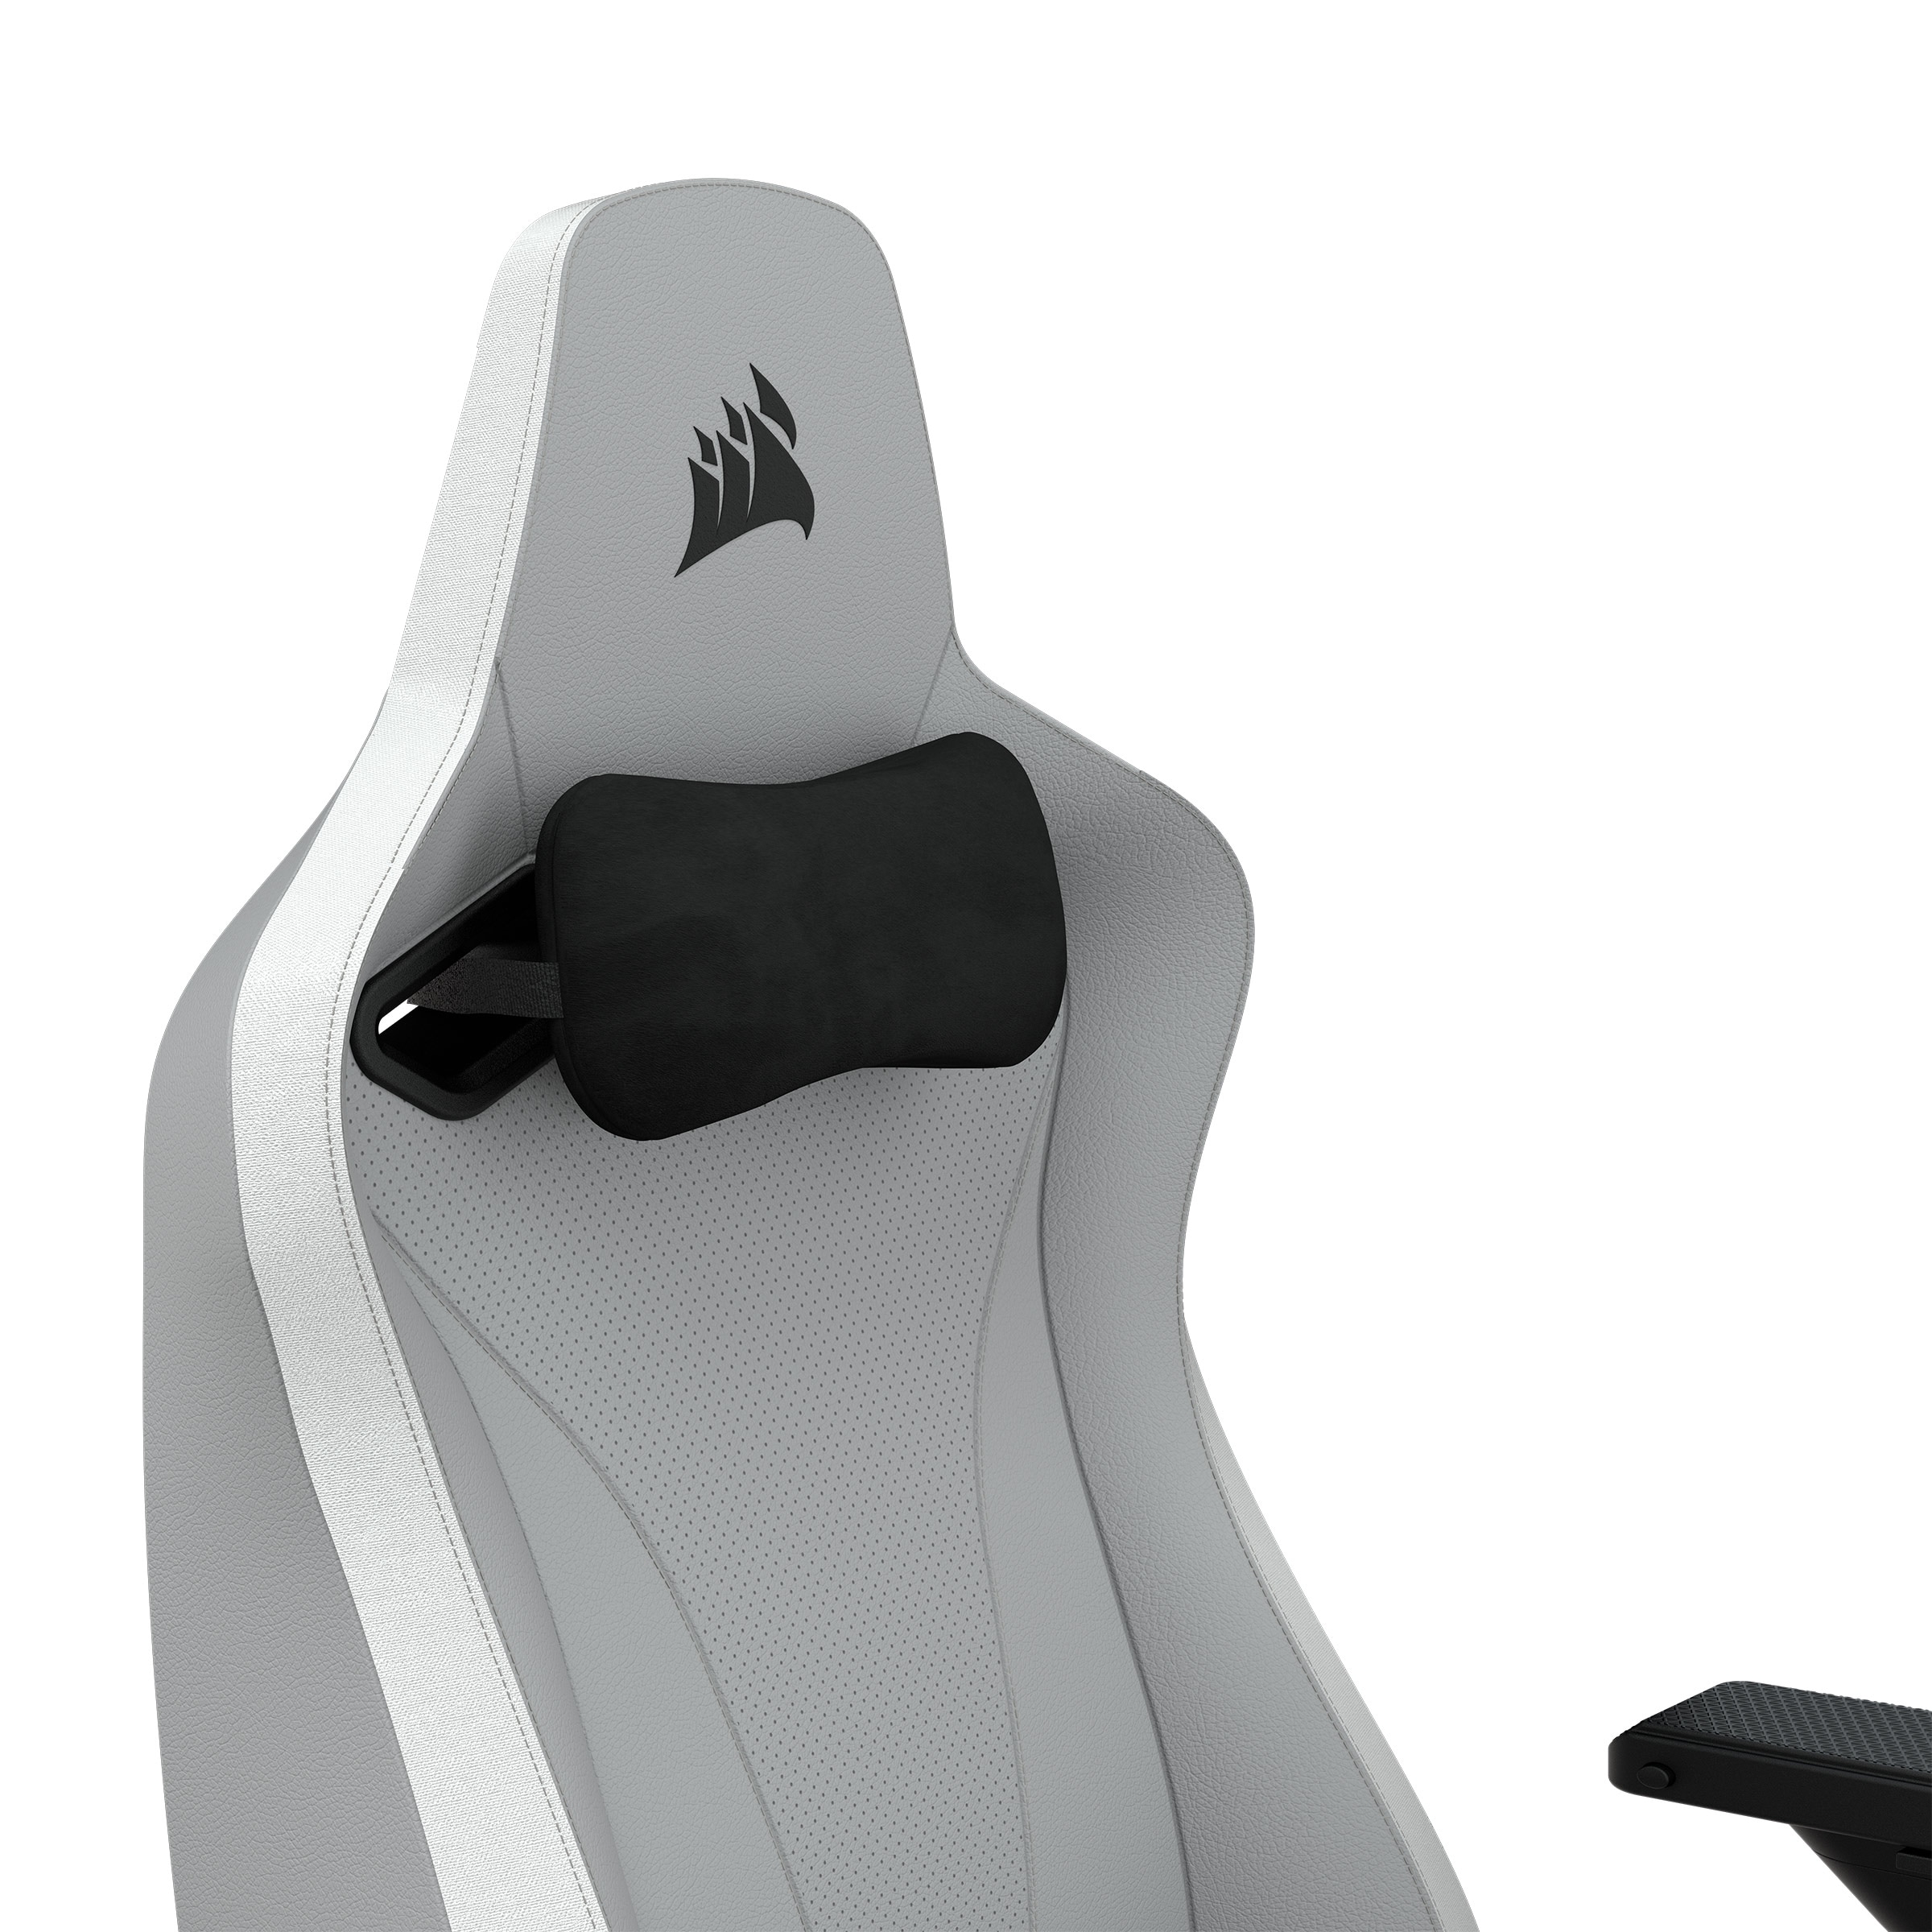 Corsair Gaming-Stuhl »TC200 Leatherette Gaming Chair, Standard Fit, Light  Grey/White« ab 99 CHF versandkostenfrei bestellen